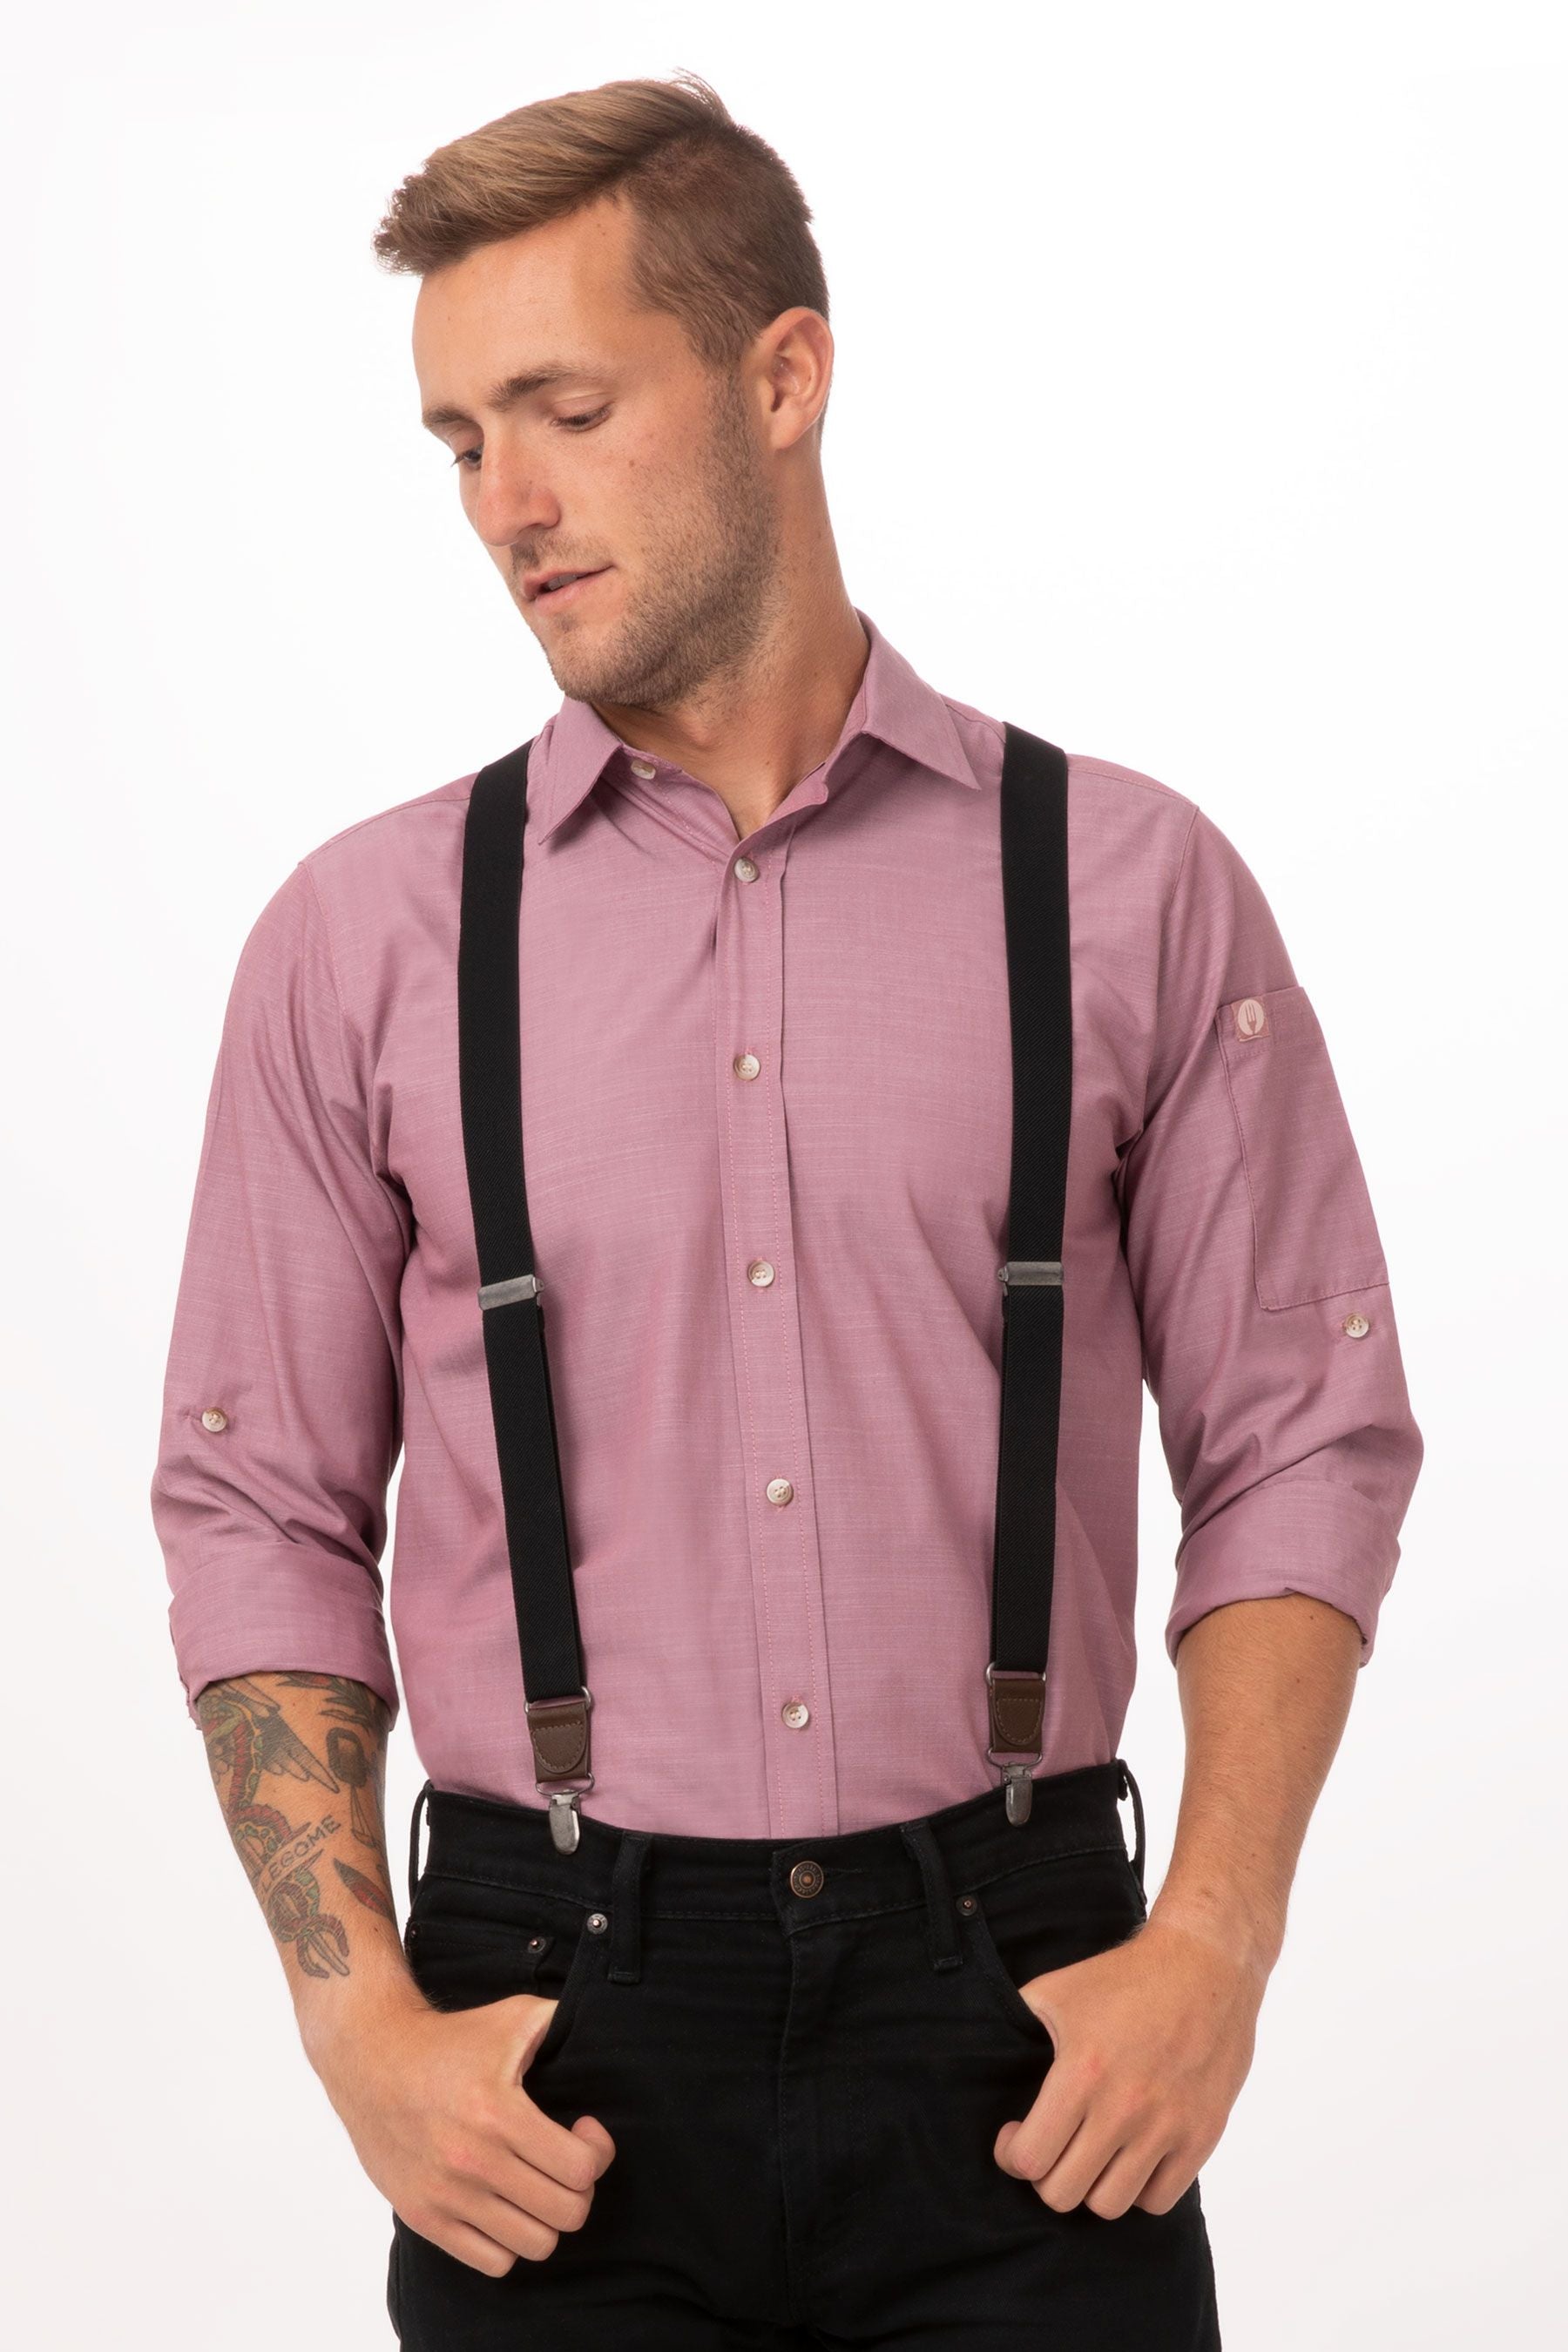 Black 4 Clips Suspenders Belt Adjustable Jacquard Y-back Suspenders Pants  Suspenders For Pants